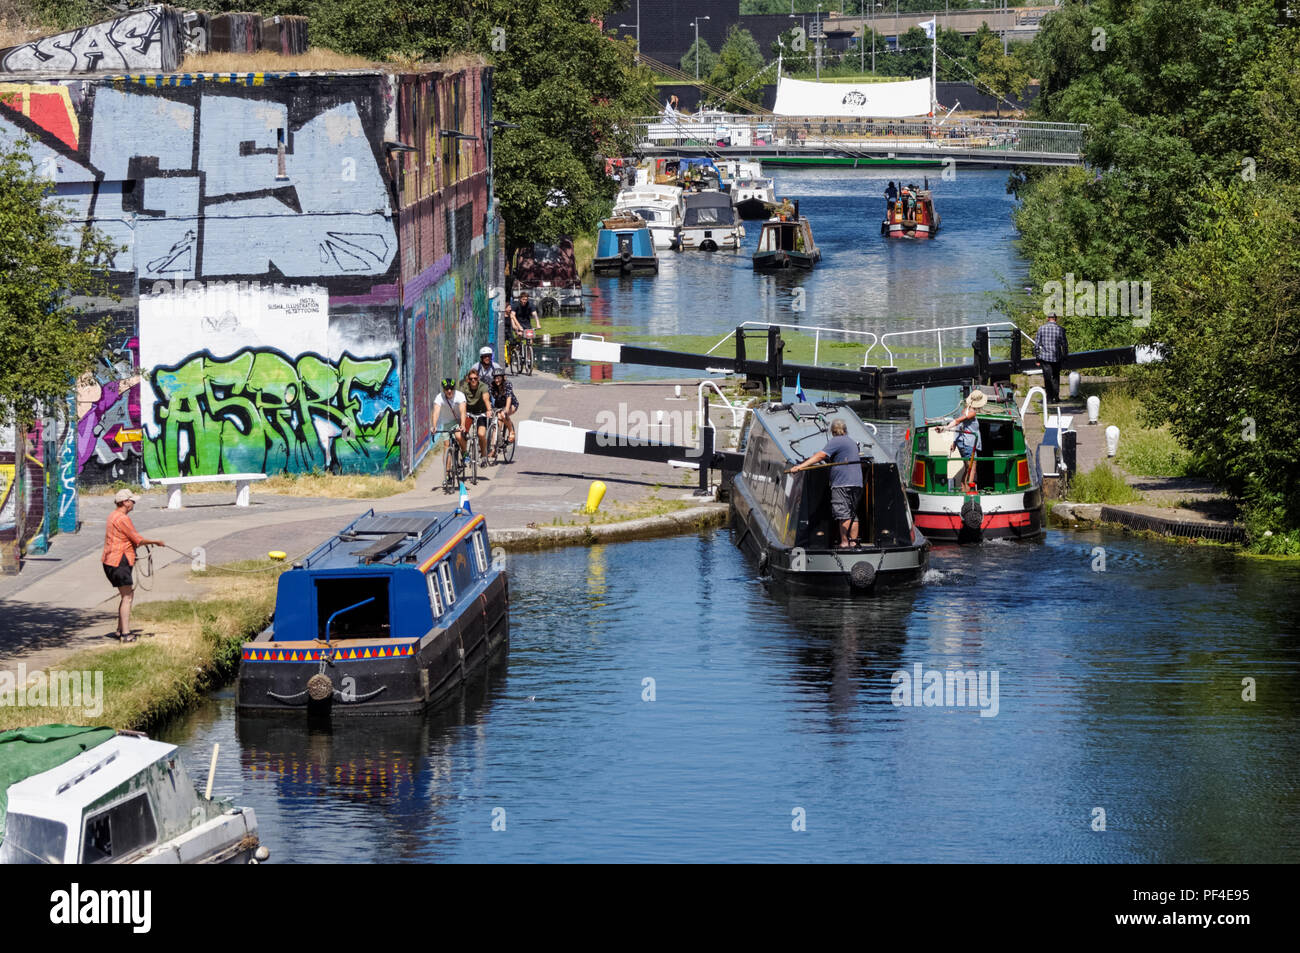 Narrowboats à Hertford Union Européenne écluse n° 3, Hertford Union Canal, Londres Angleterre Royaume-Uni UK Banque D'Images